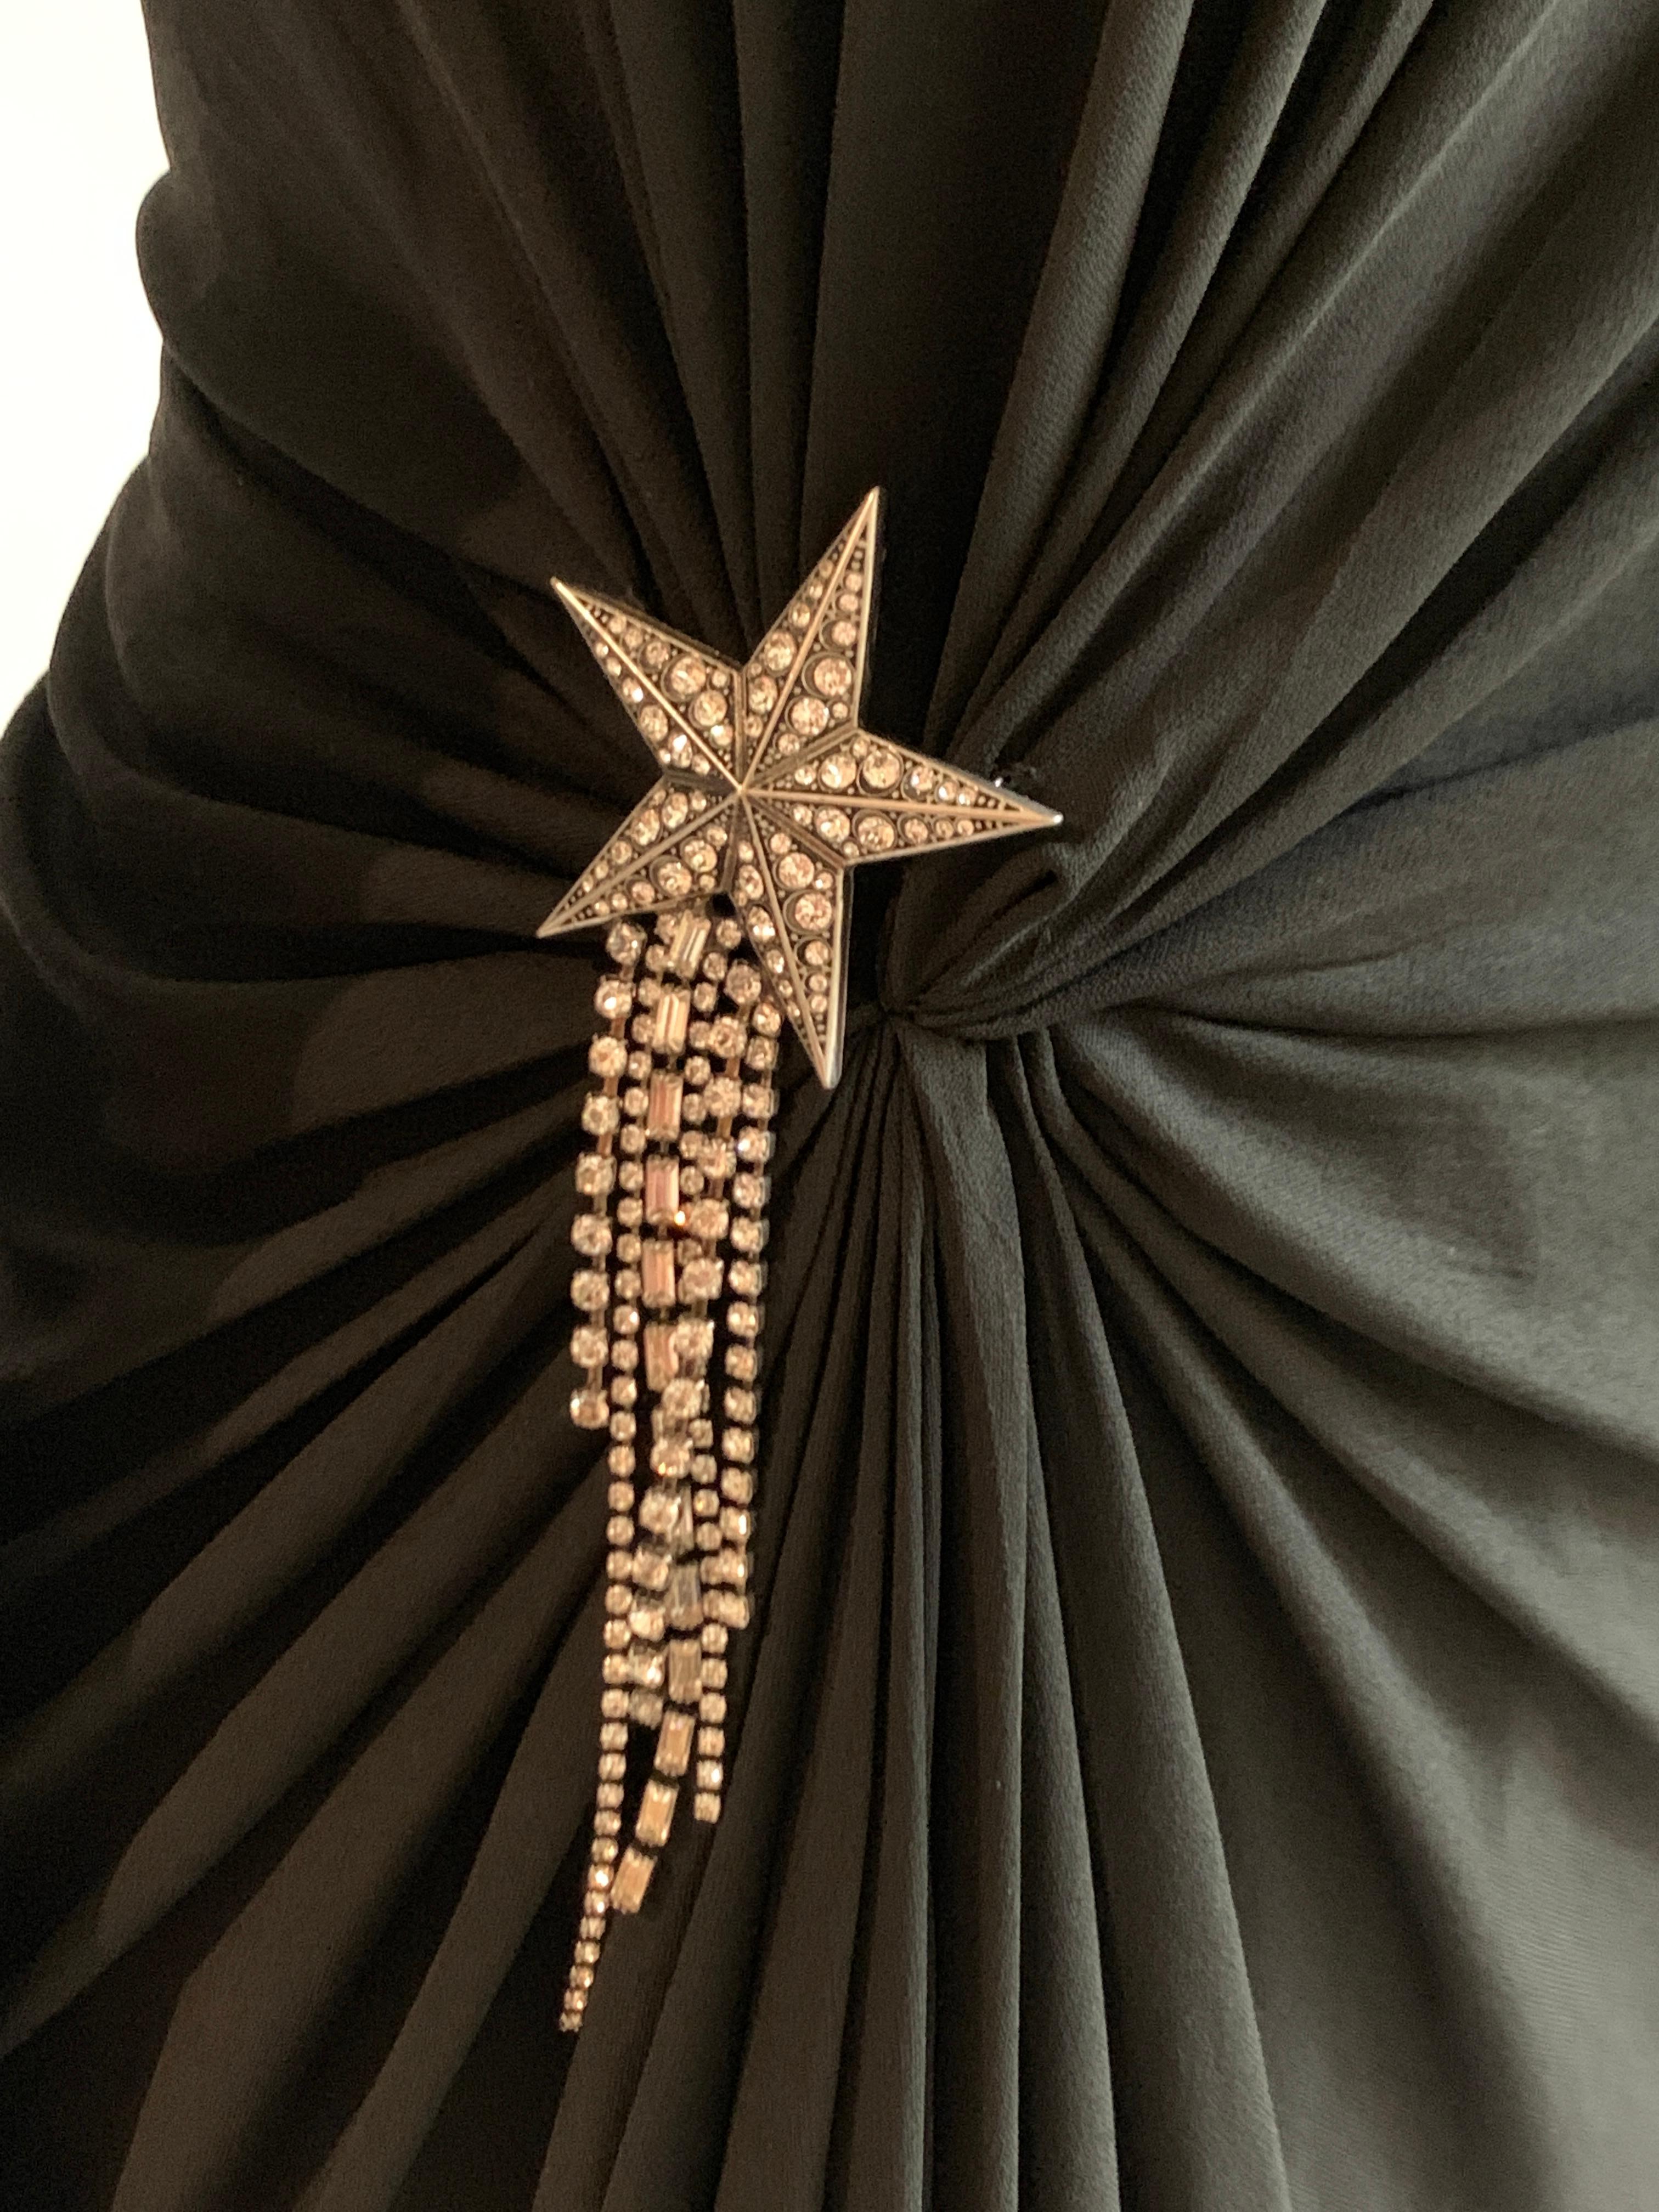 Yves Saint Laurent New Black Dress with Silver Crystal Star Charm Long Sleeve 1